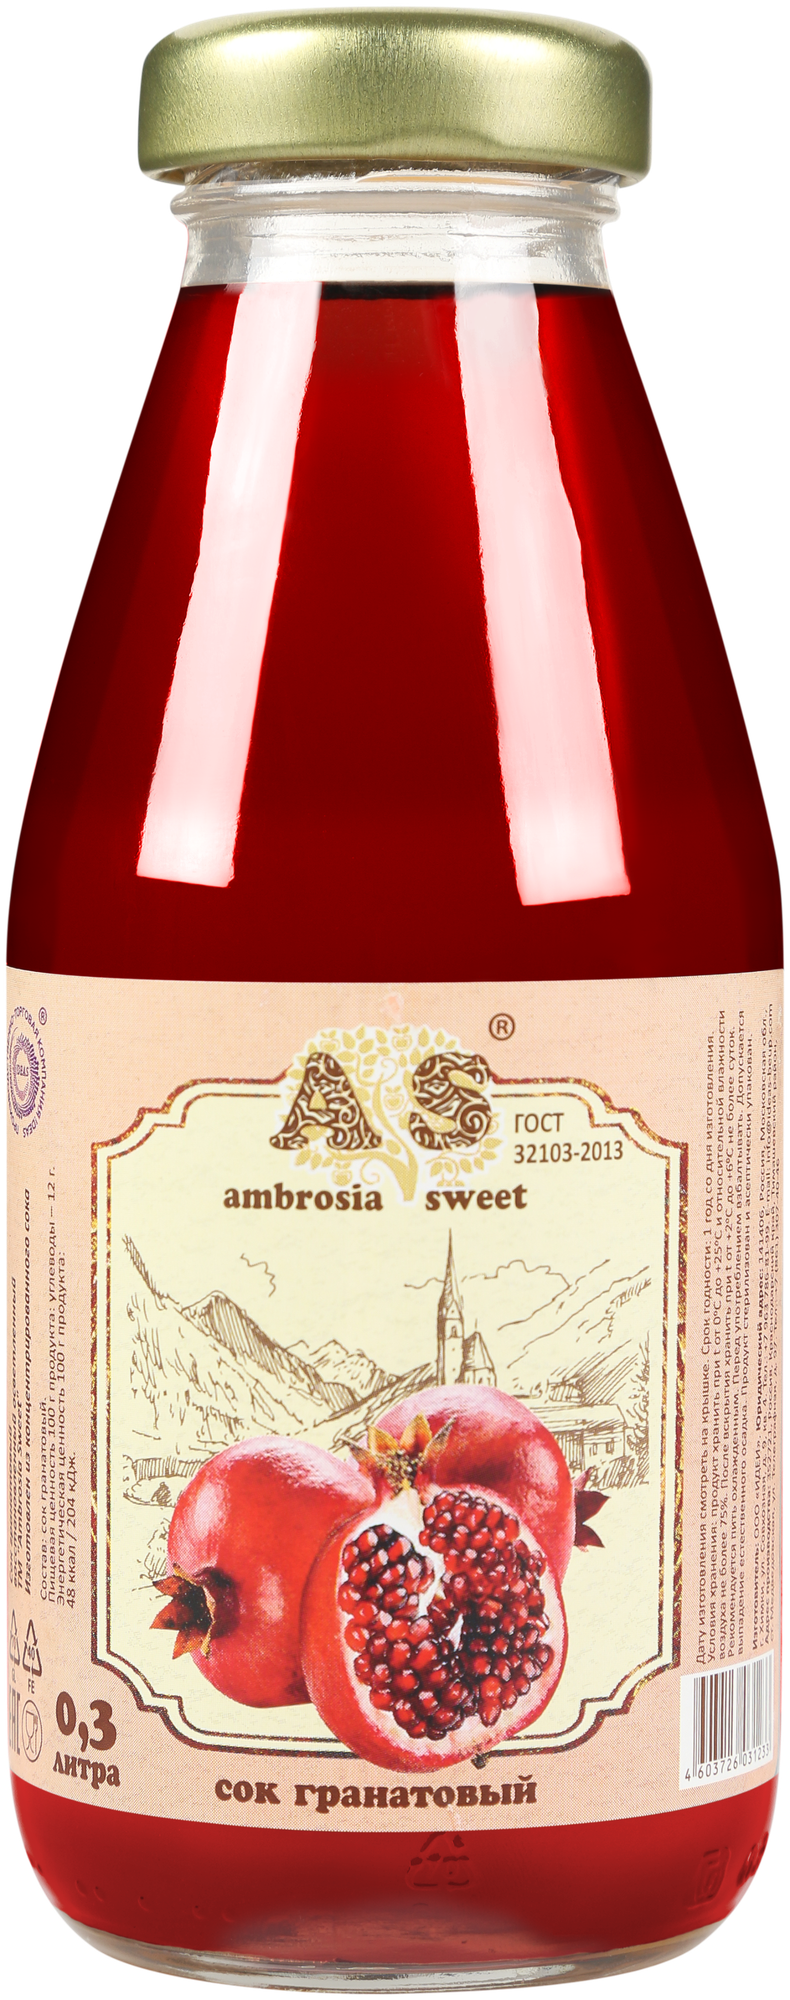 Сок гранатовый Ambrosia Sweet 0,3л